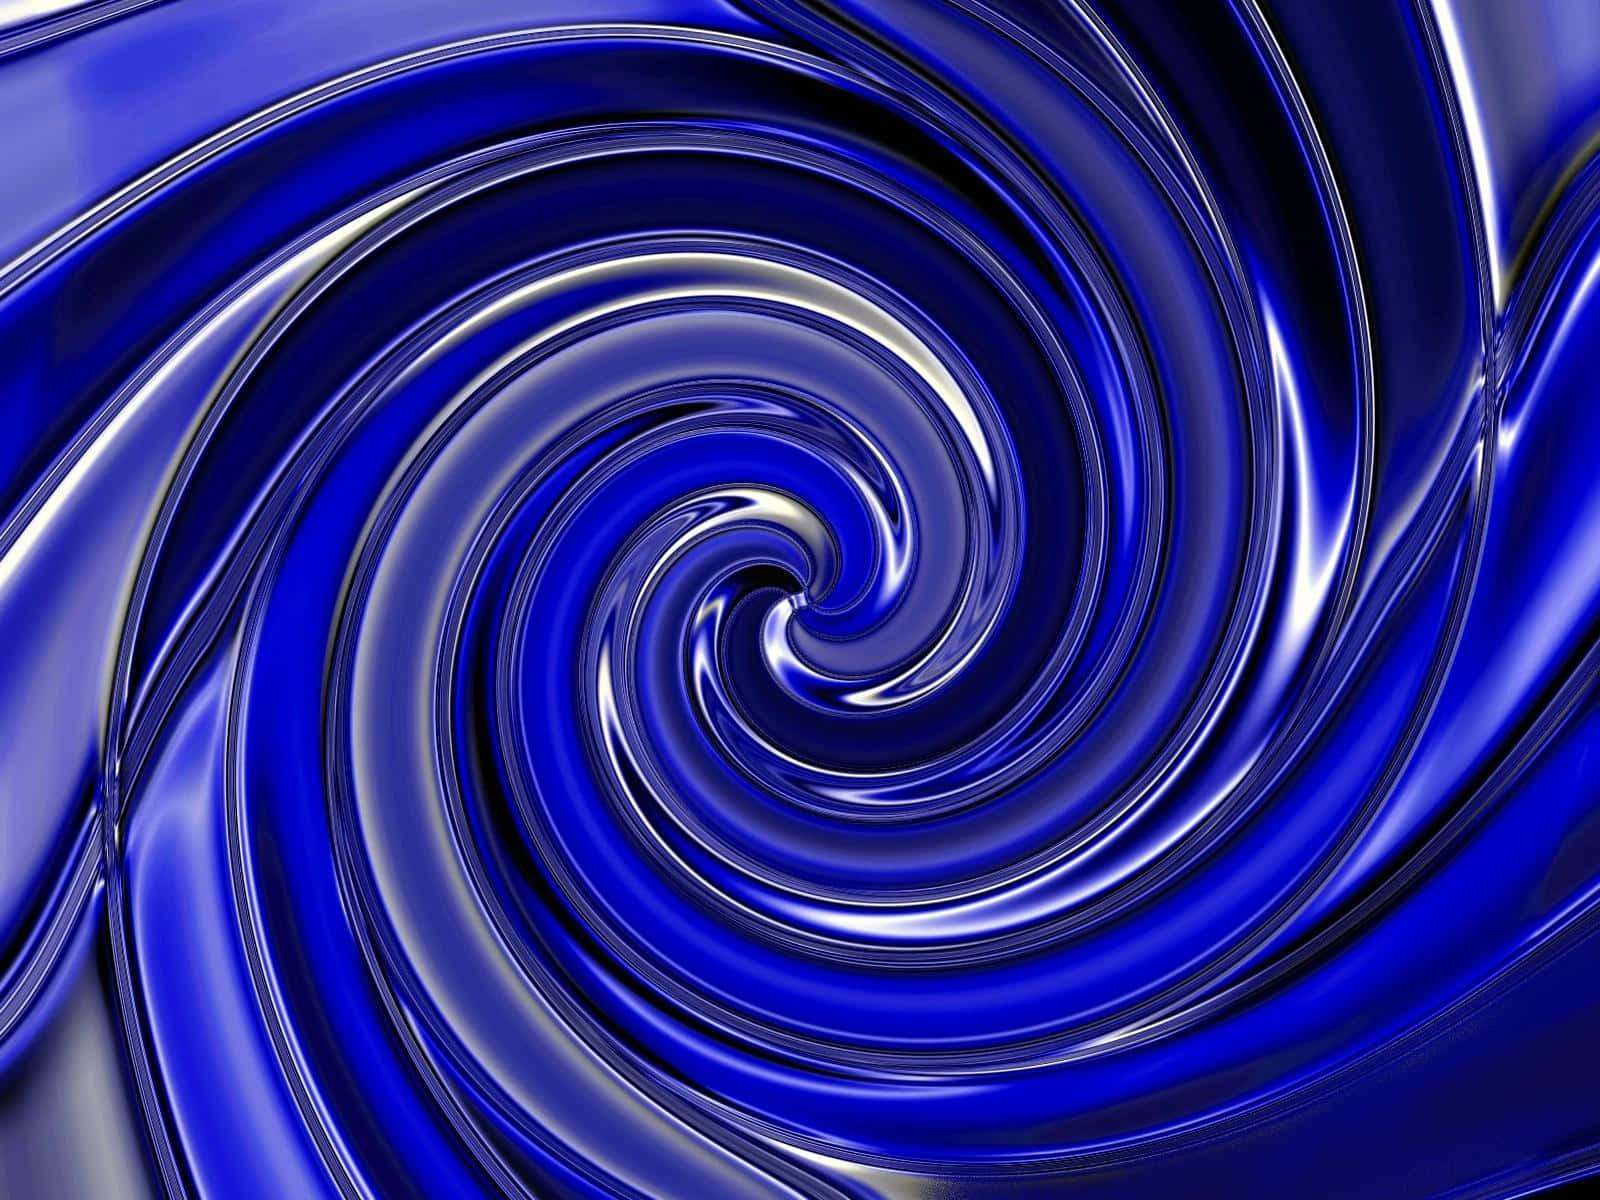 Royal Blue Liquid Swirls Background